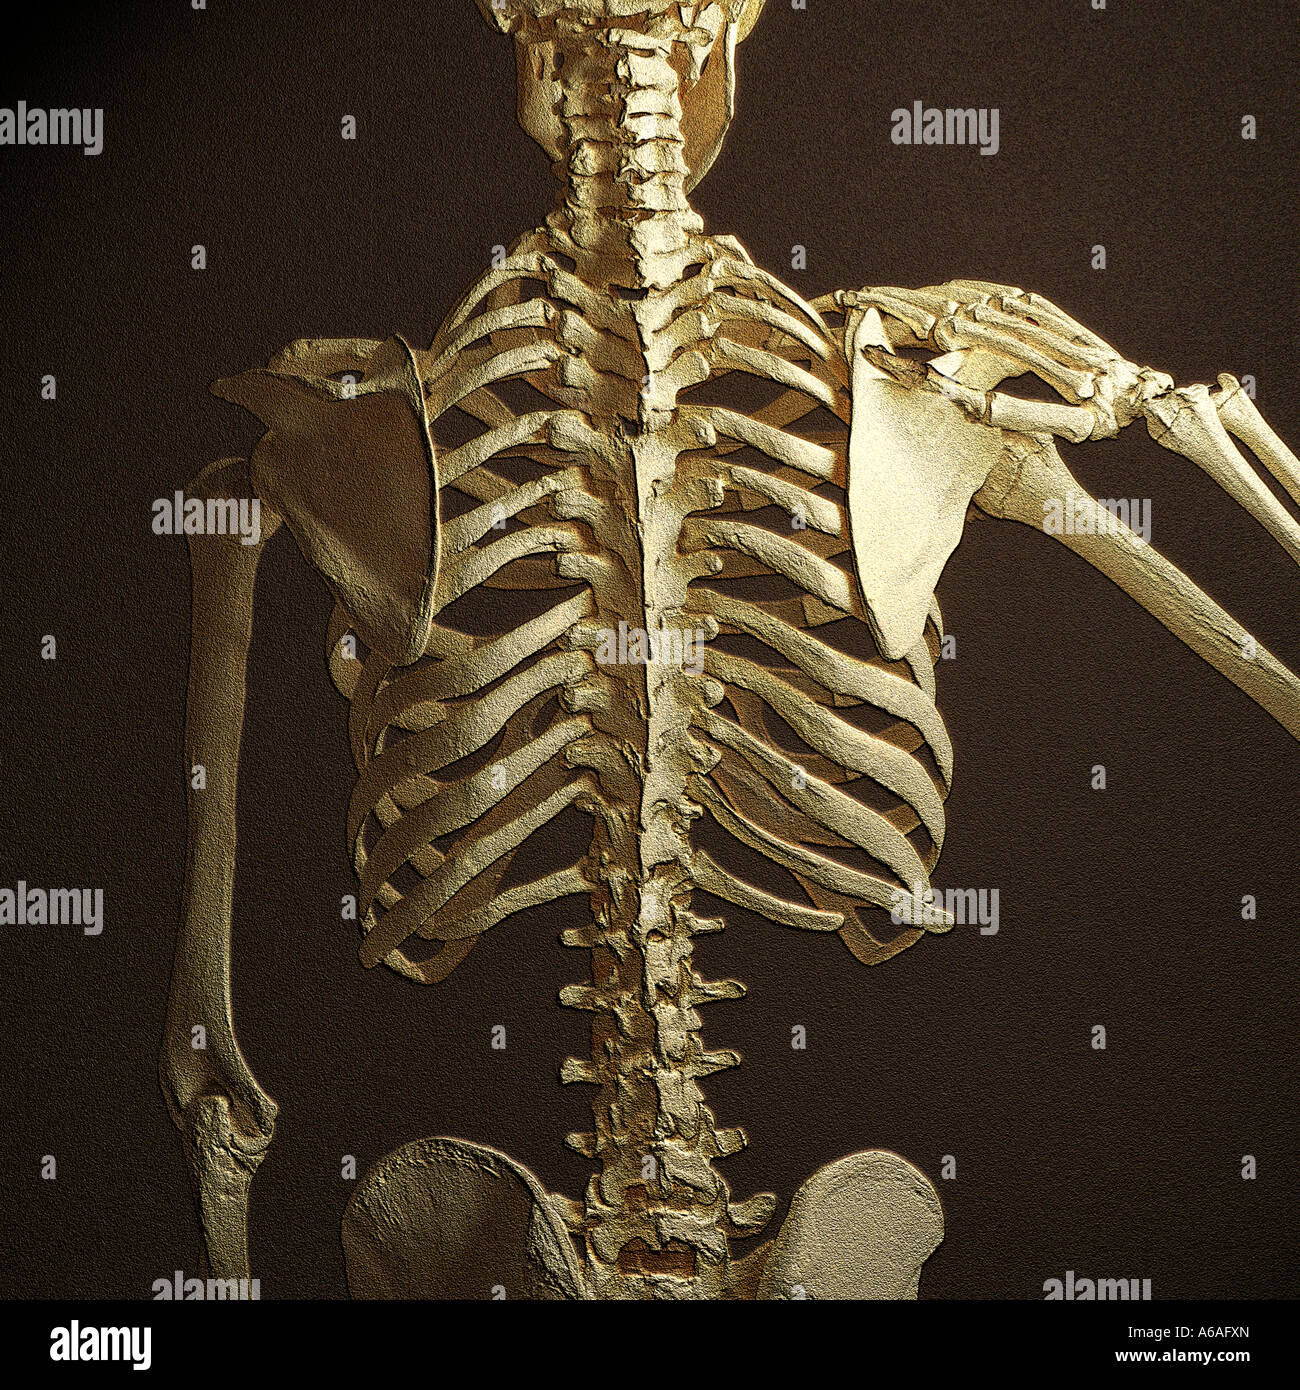 Skeleton Showing Ribs Backbone Stock Photos & Skeleton Showing Ribs Backbone Stock Images - Alamy